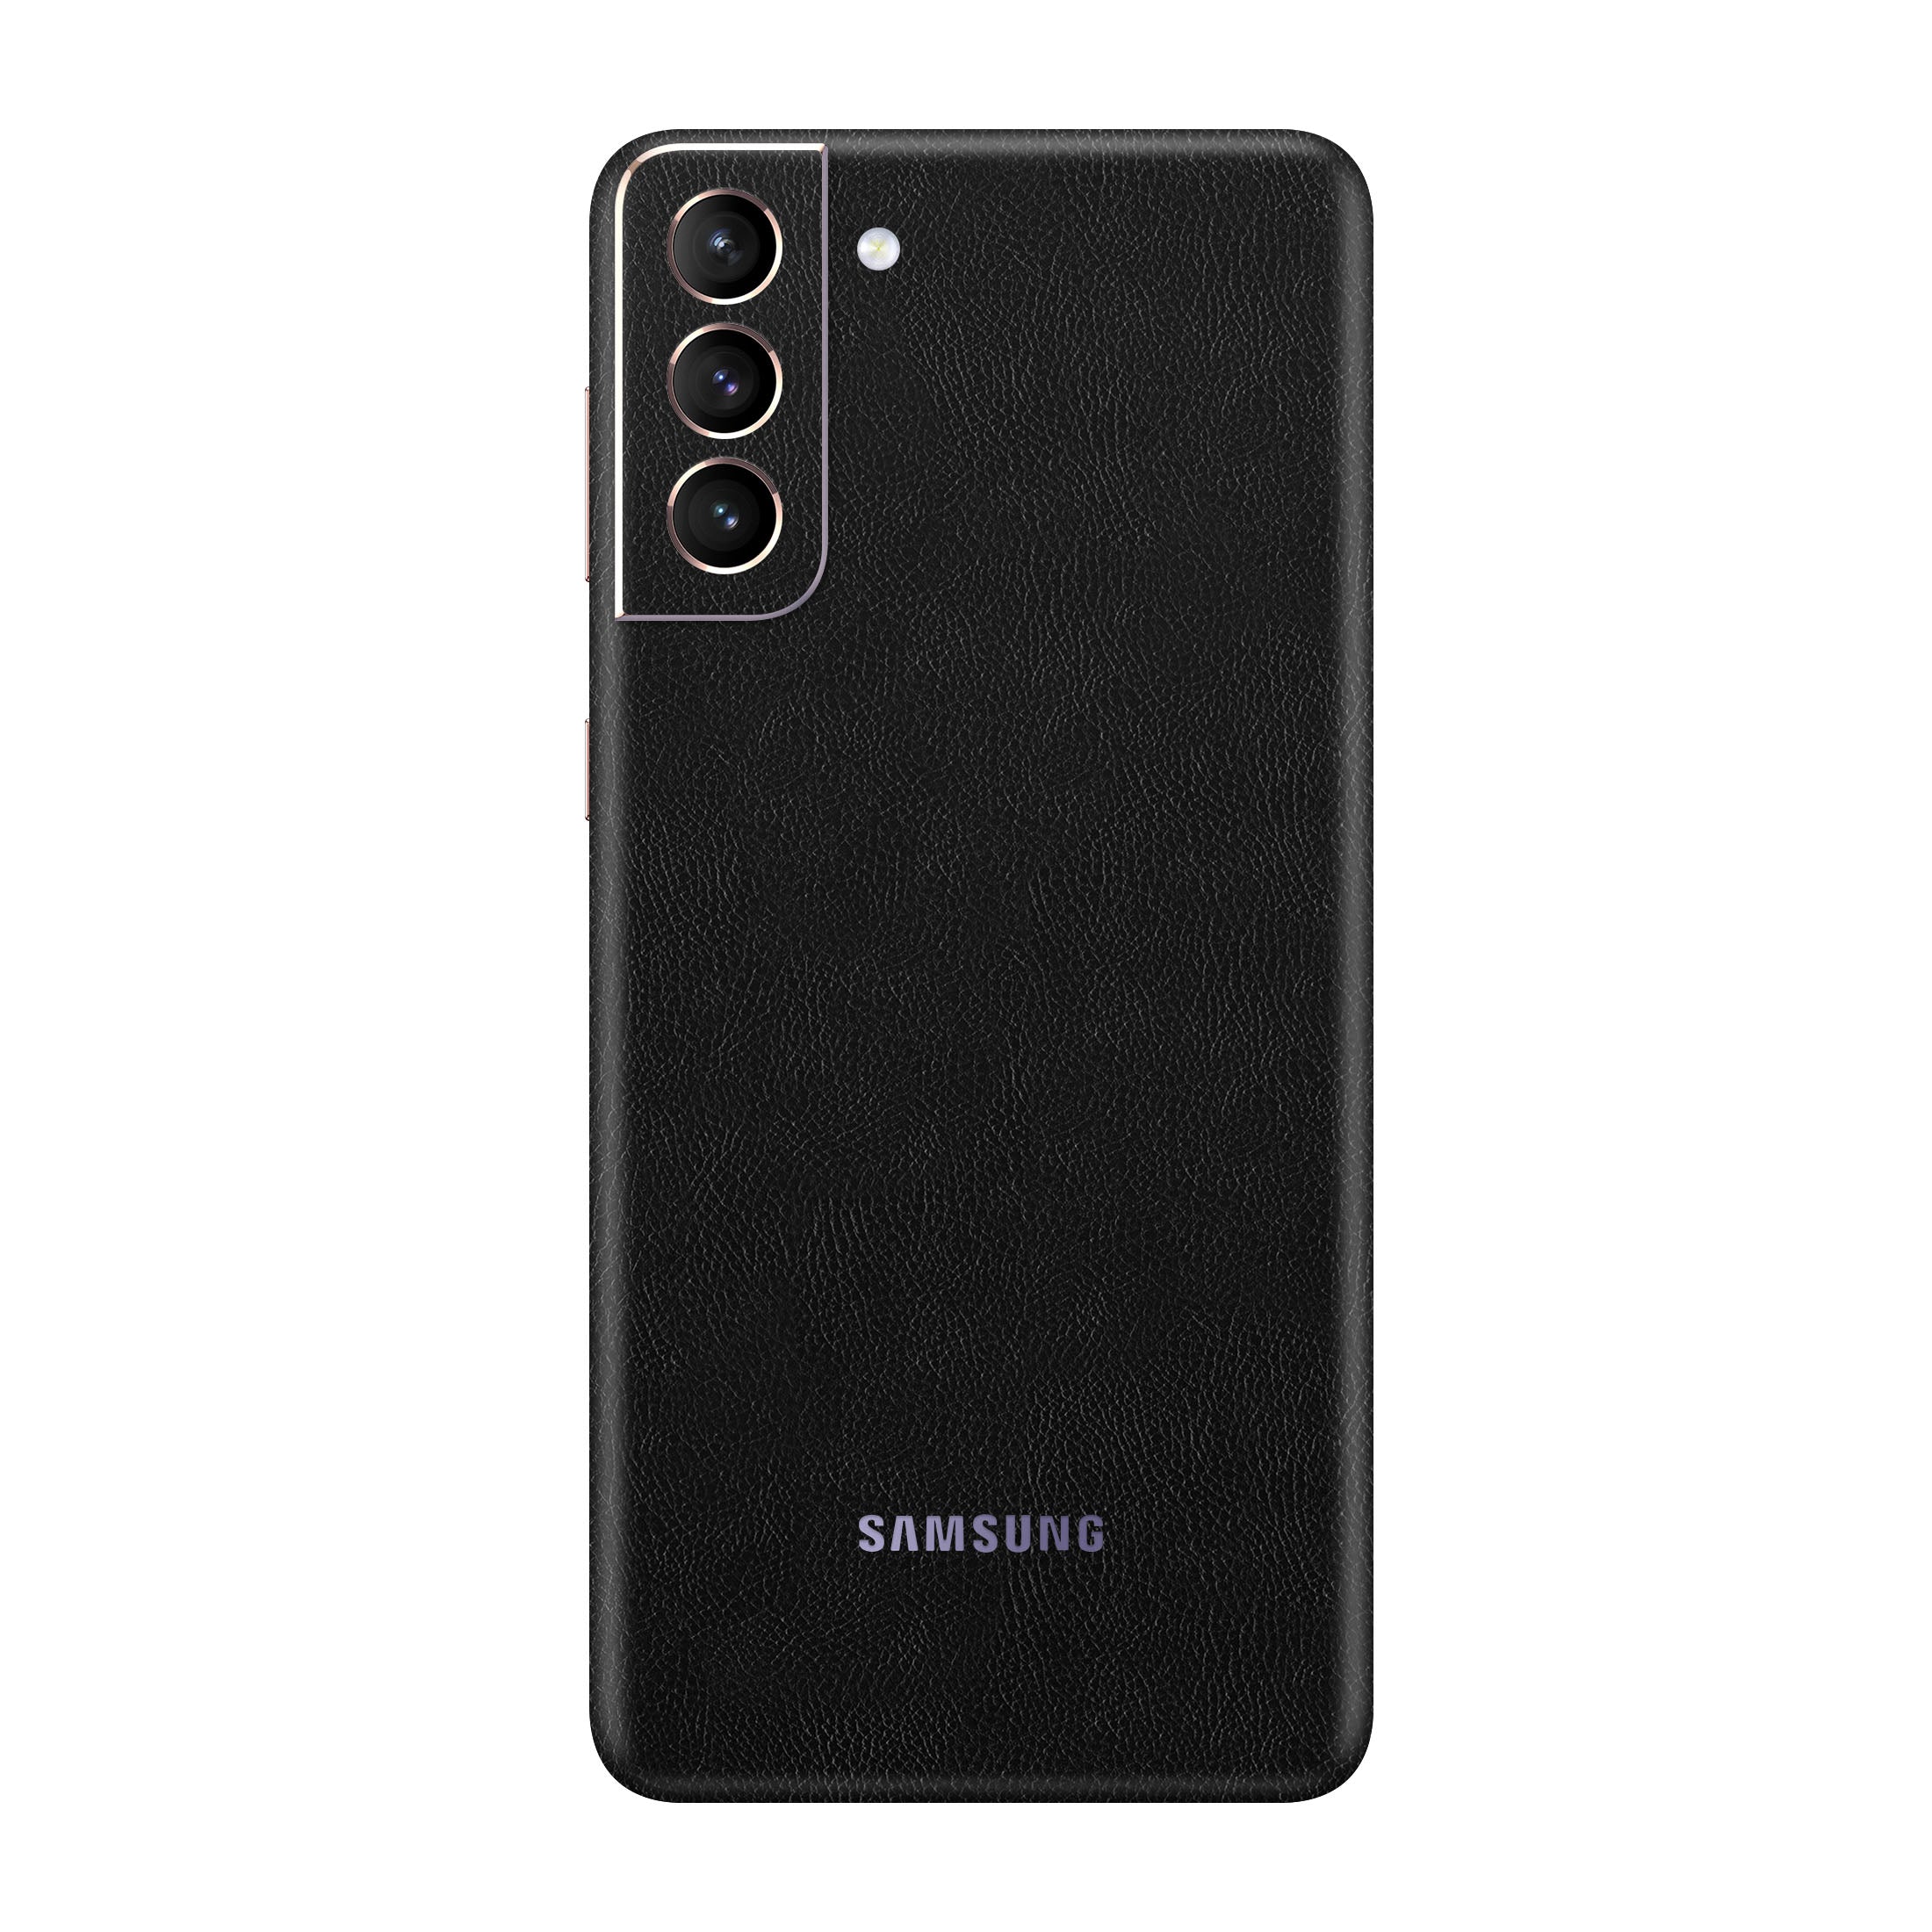 Cowhide Black Skin for Samsung S21